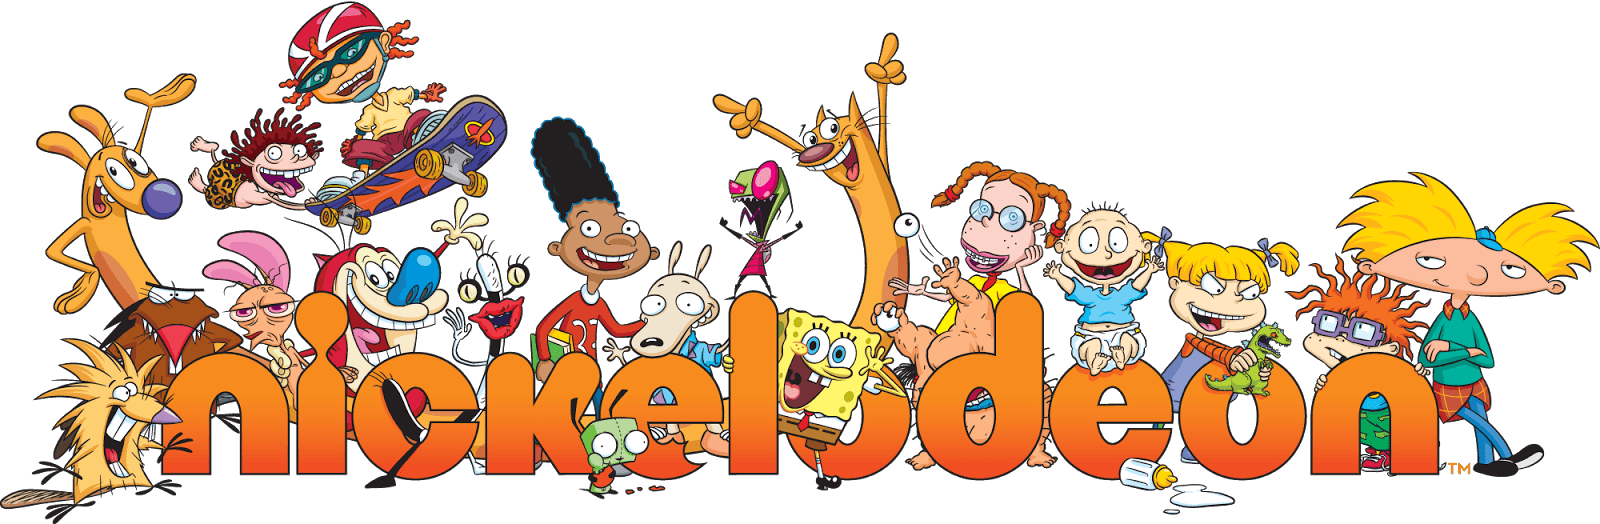 Nicksplat Logo - Nickelodeon Logo With 90s Nicktoons Stars Characters NickSplat The